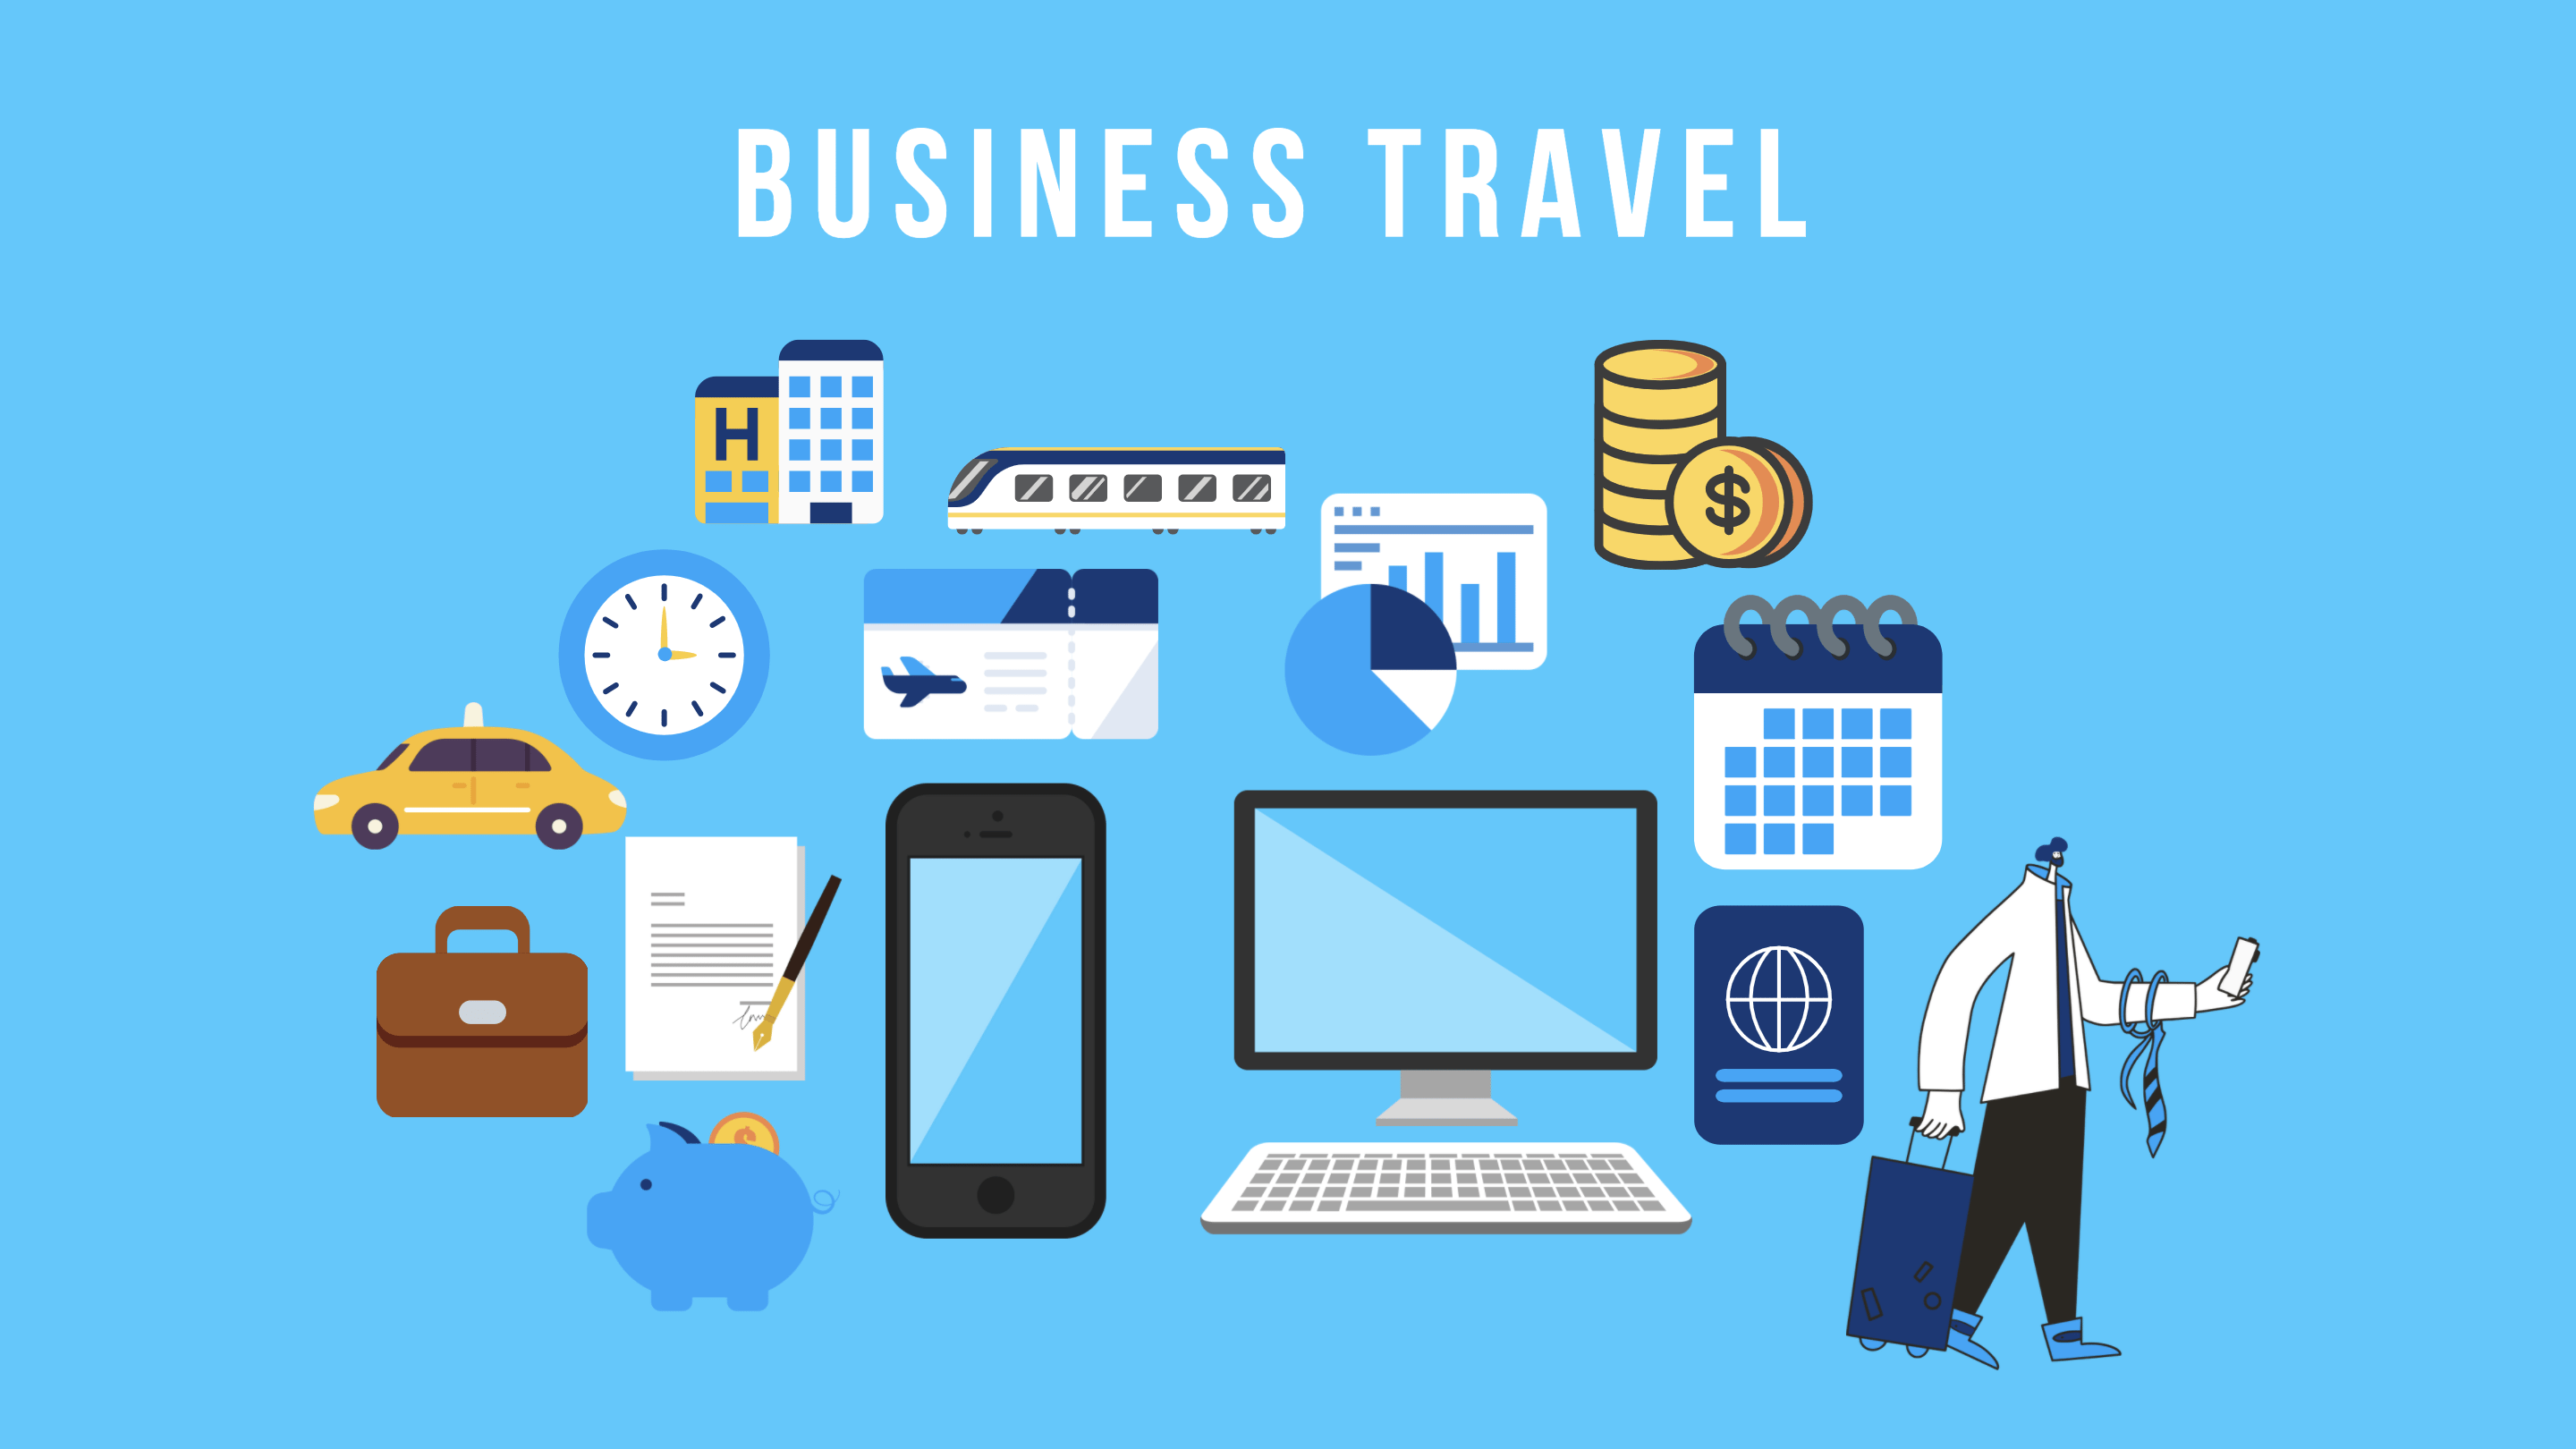 Organizing business travel the alternatives